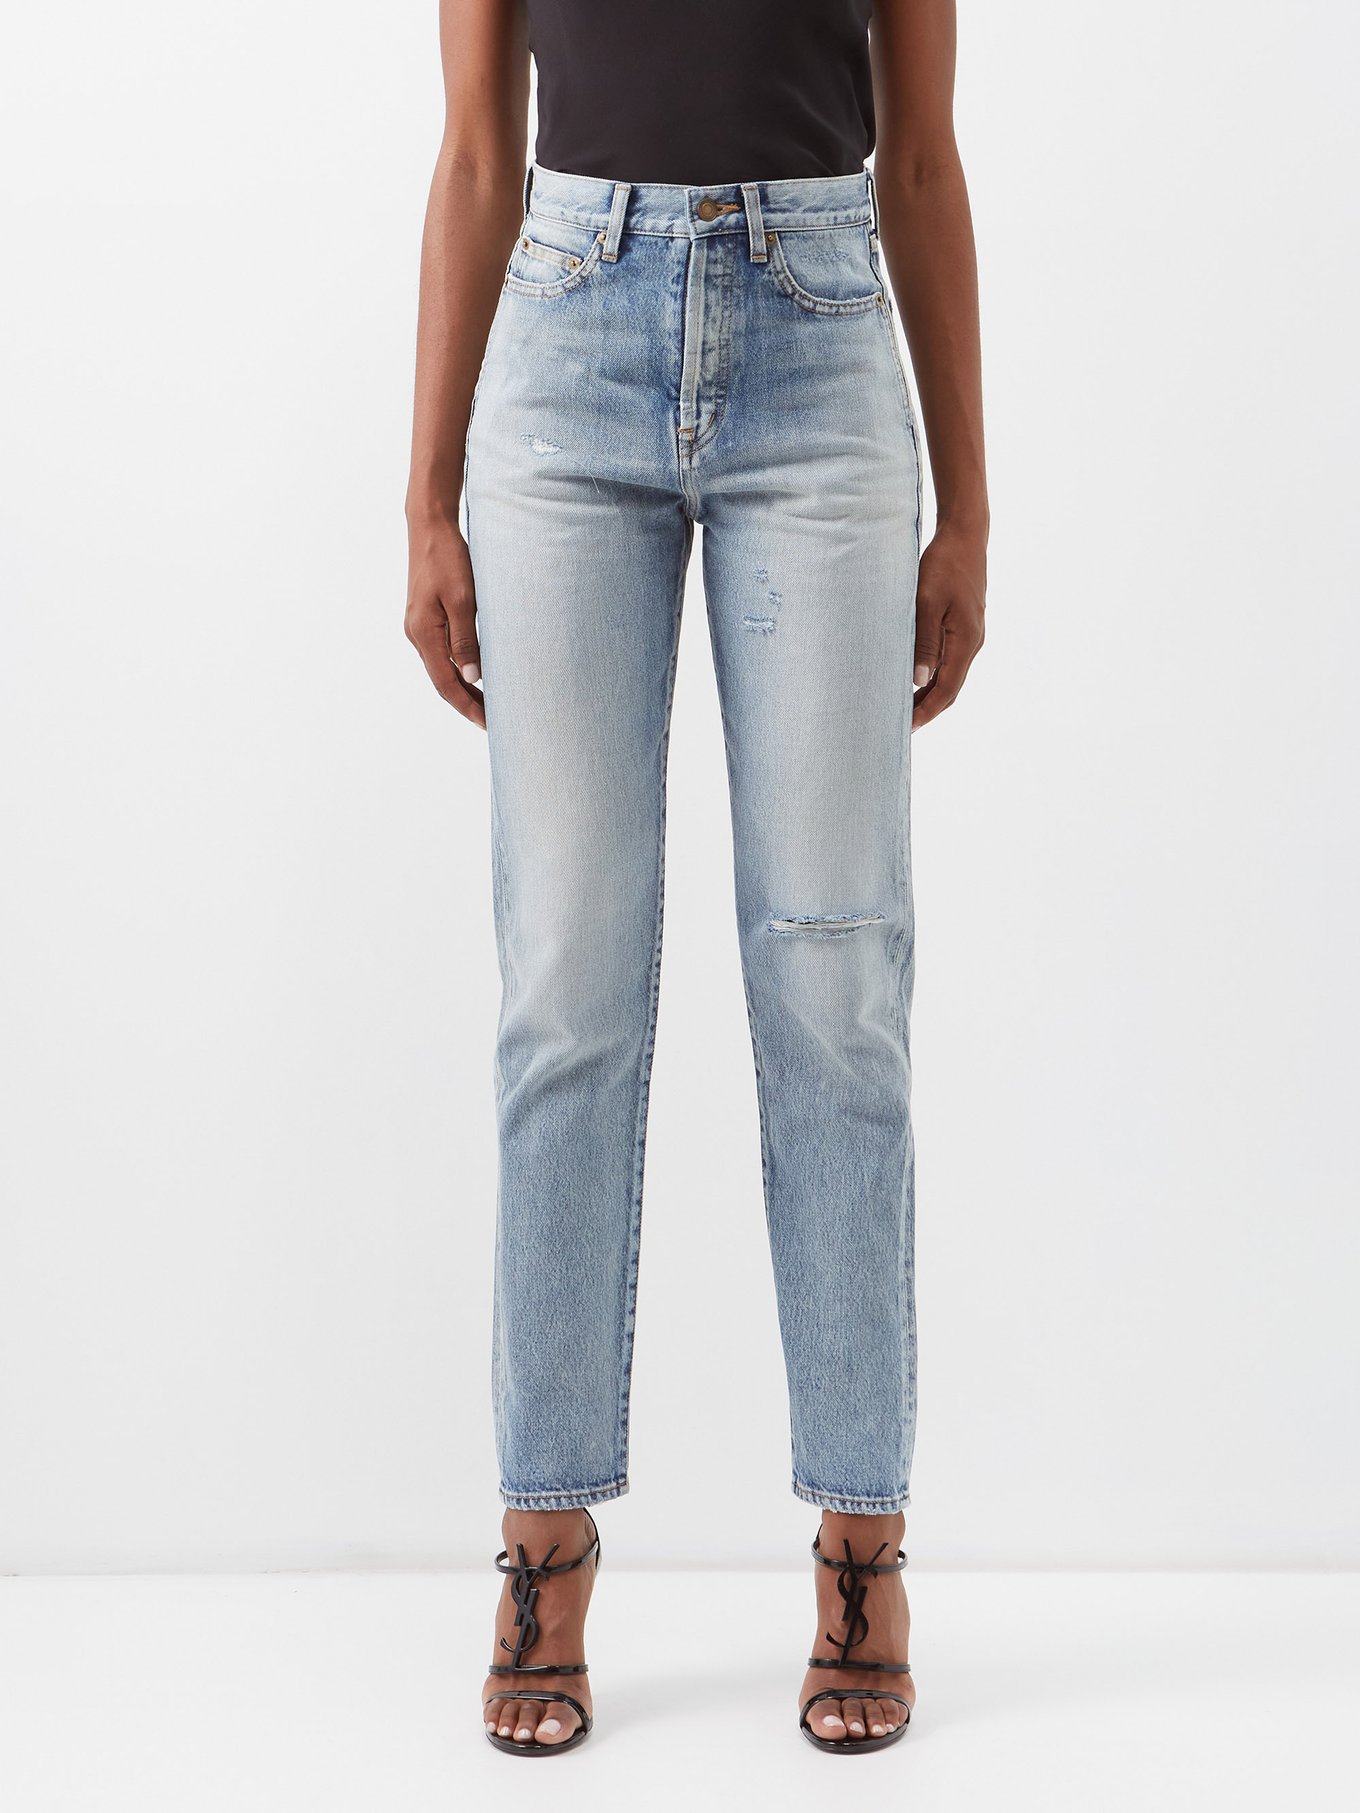 Distressed skinny jeans | Saint Laurent